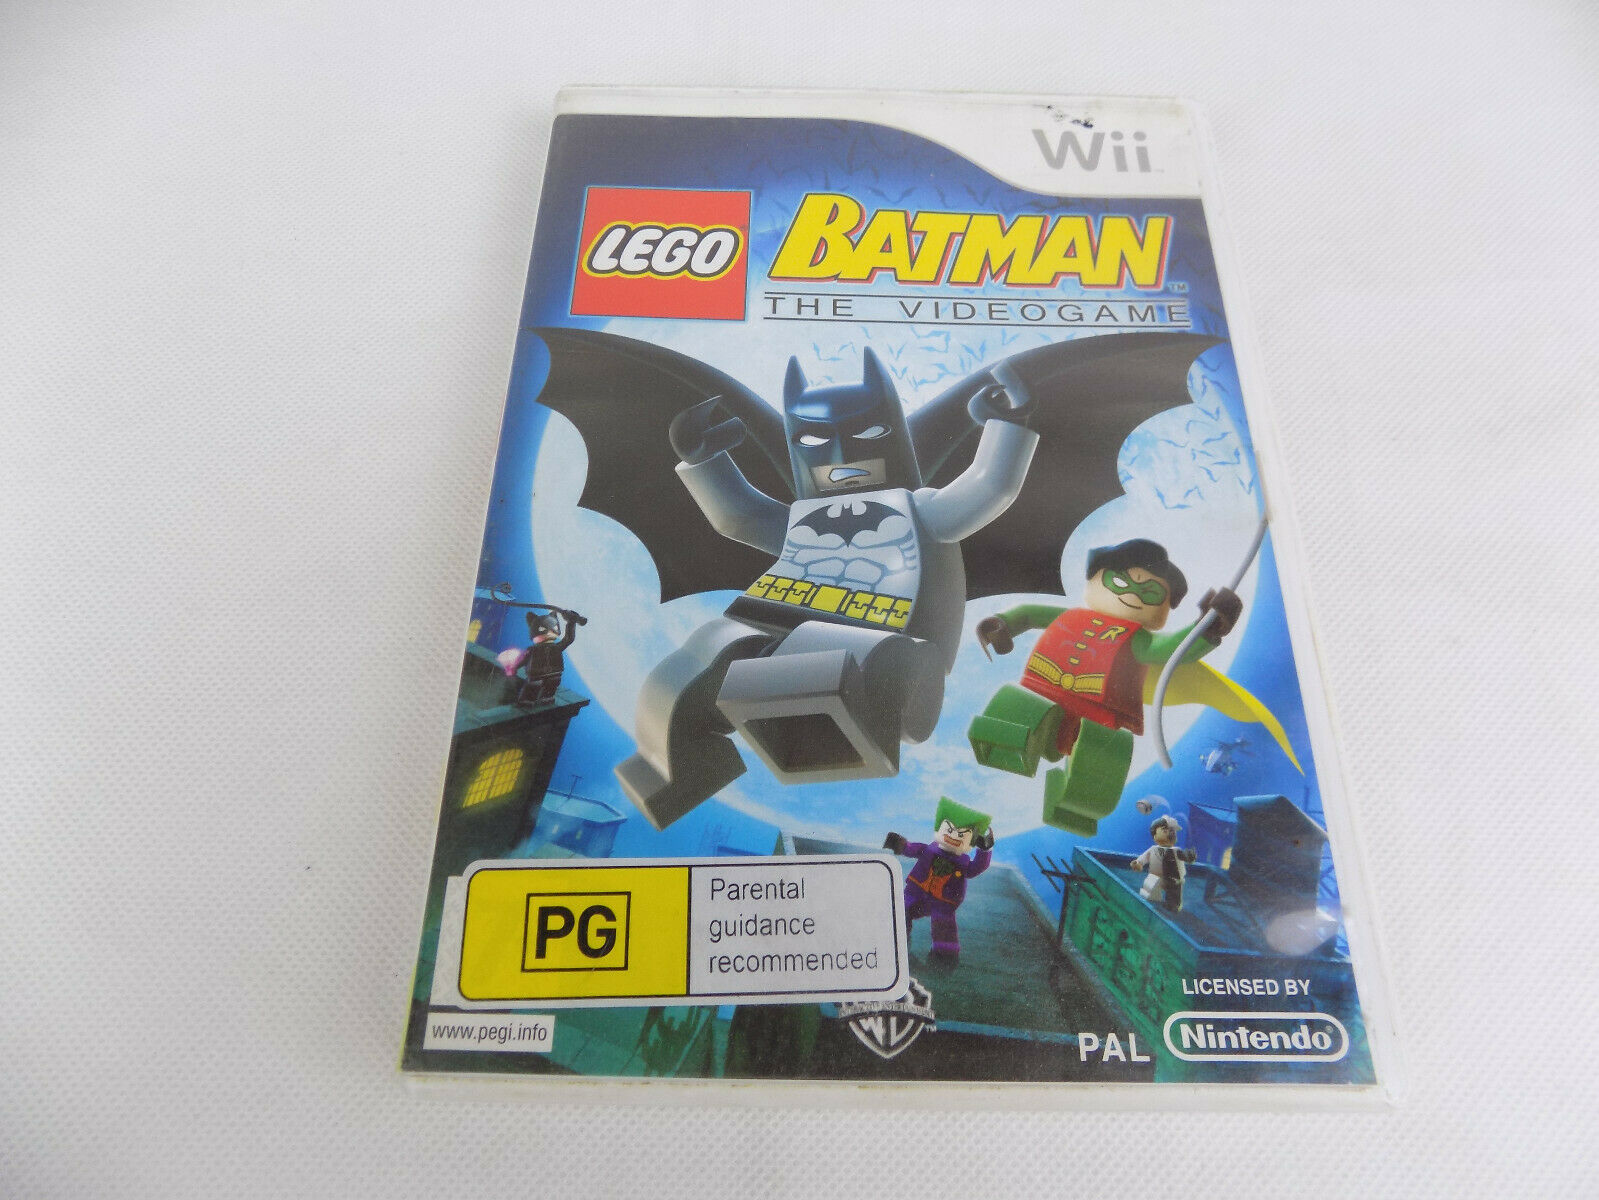 Mint Disc Nintendo Wii Lego Batman: The Videogame Wii U Comp. - No Manual -  Starboard Games